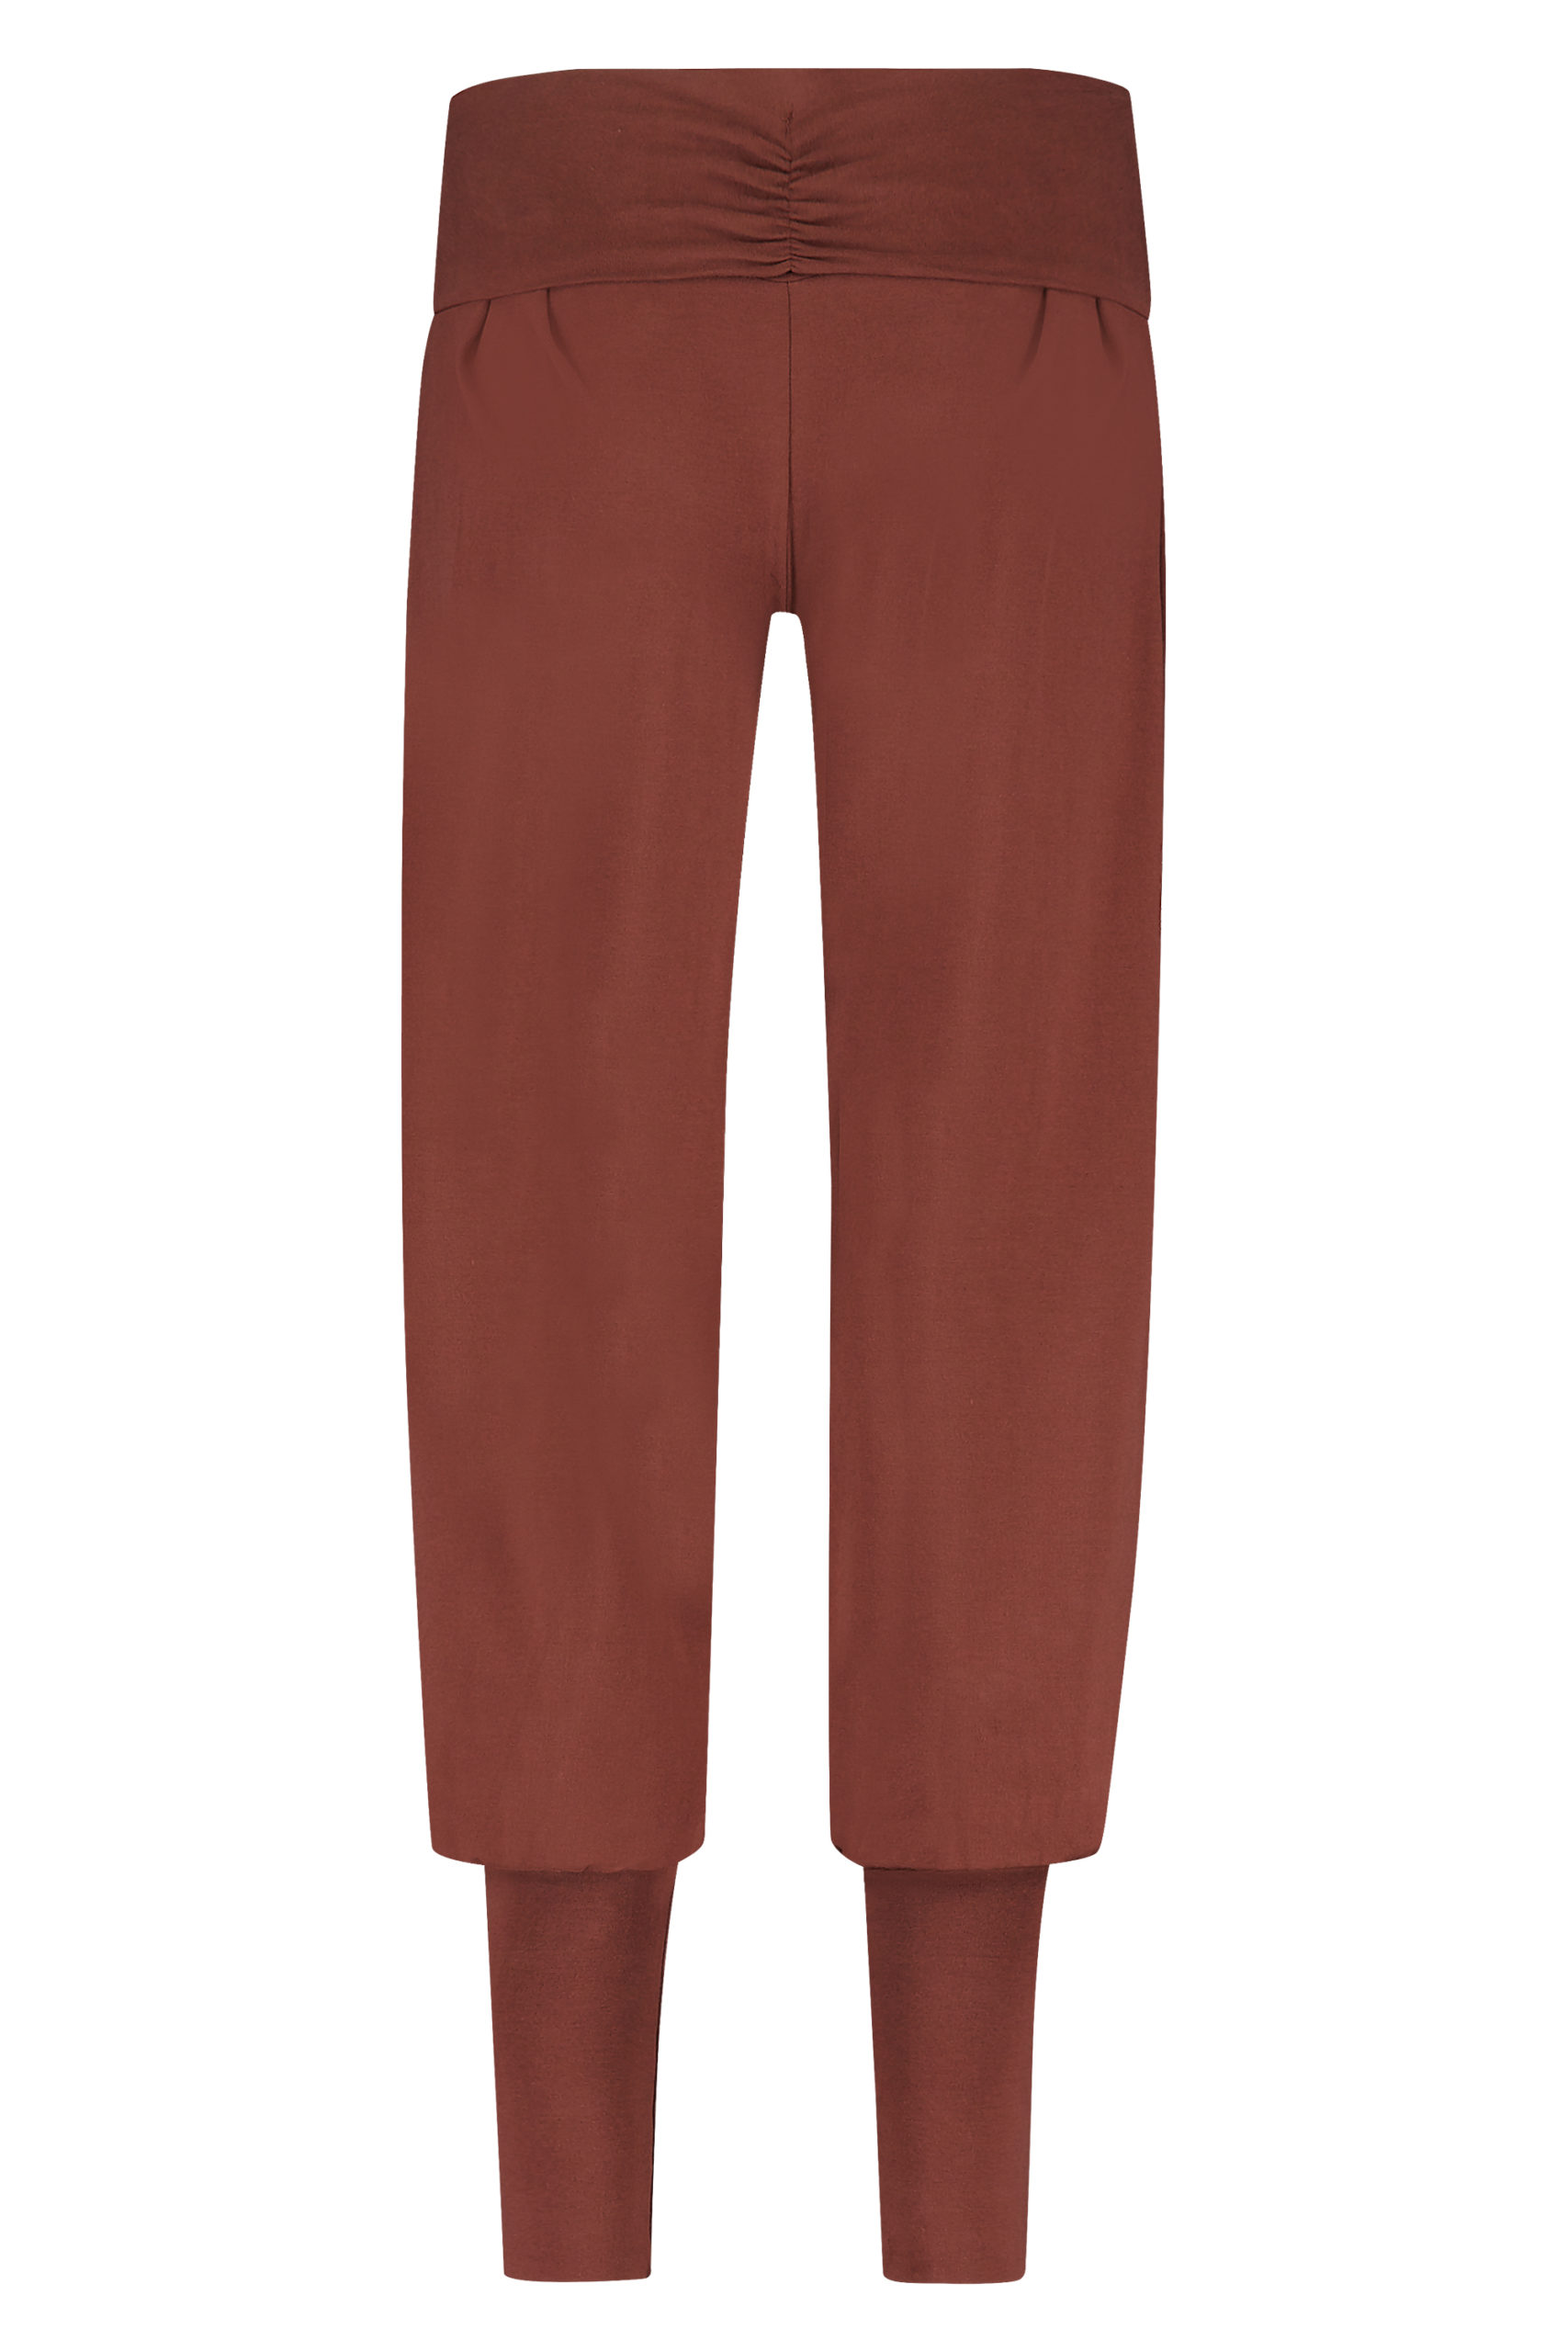 devi pants-garnet-12265545-high waist yoga broek